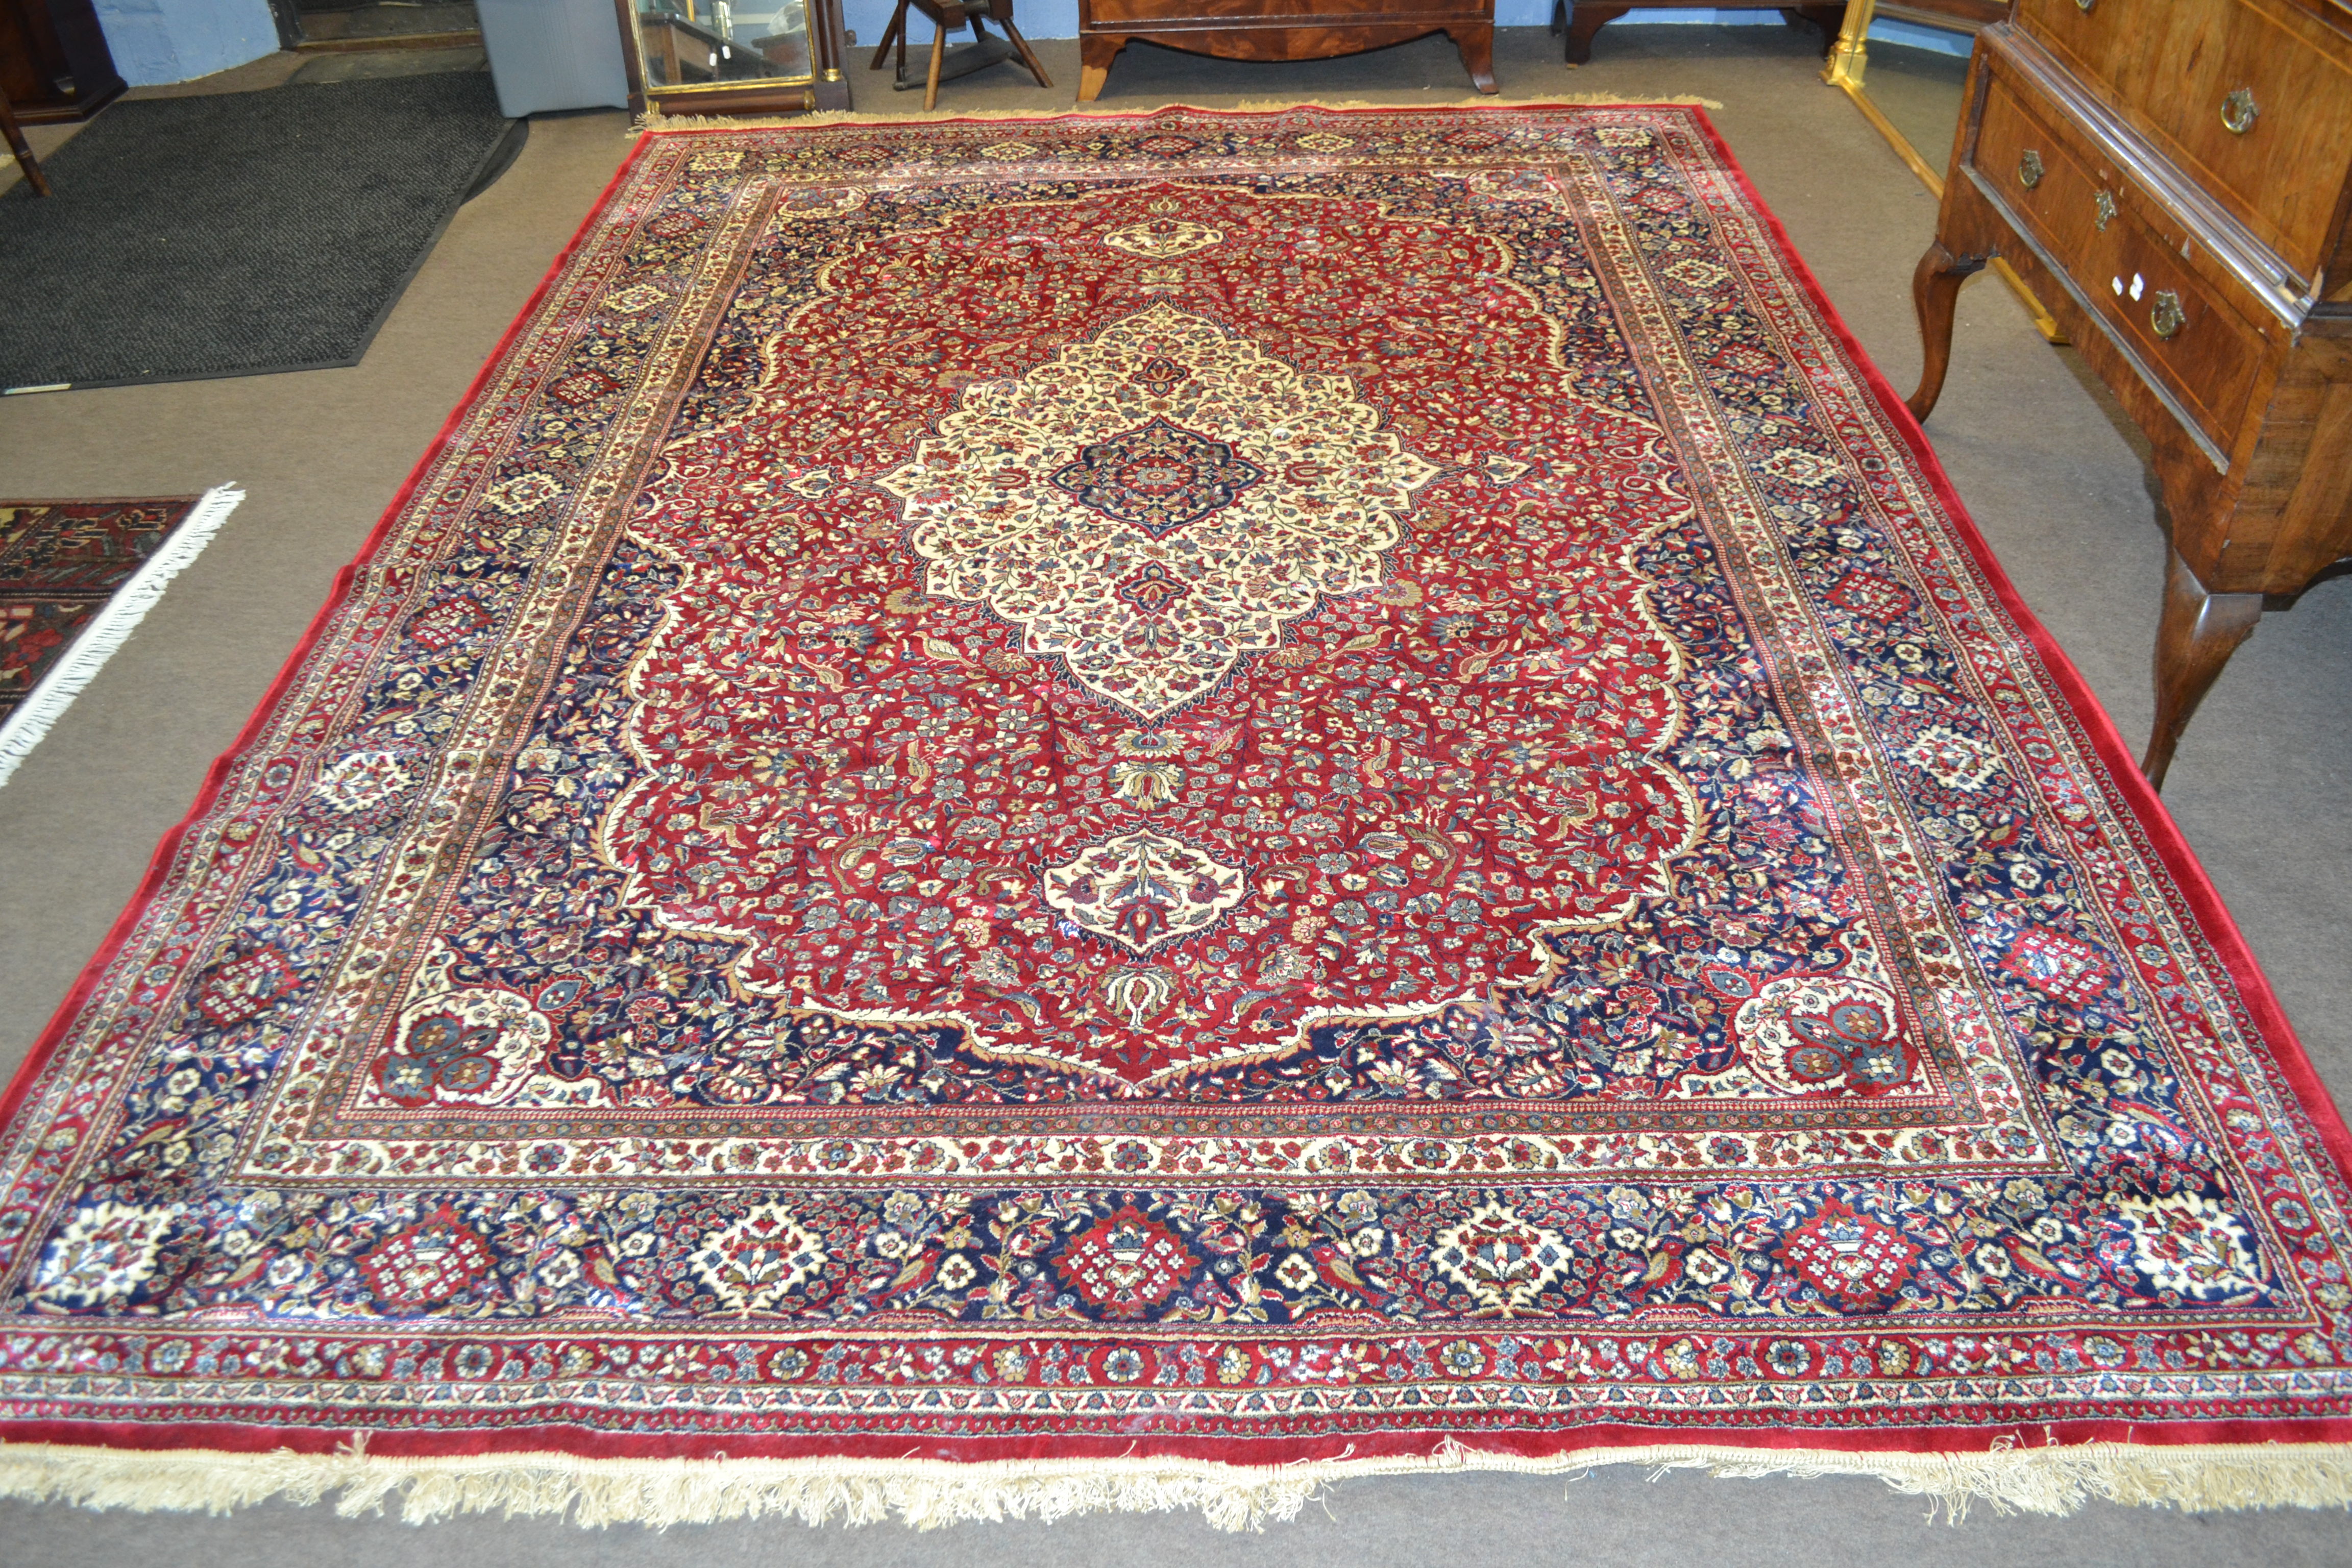 Large red ground full-pile Kashmir Carpet, floral medallion design, 340cm x 230 cm approximately